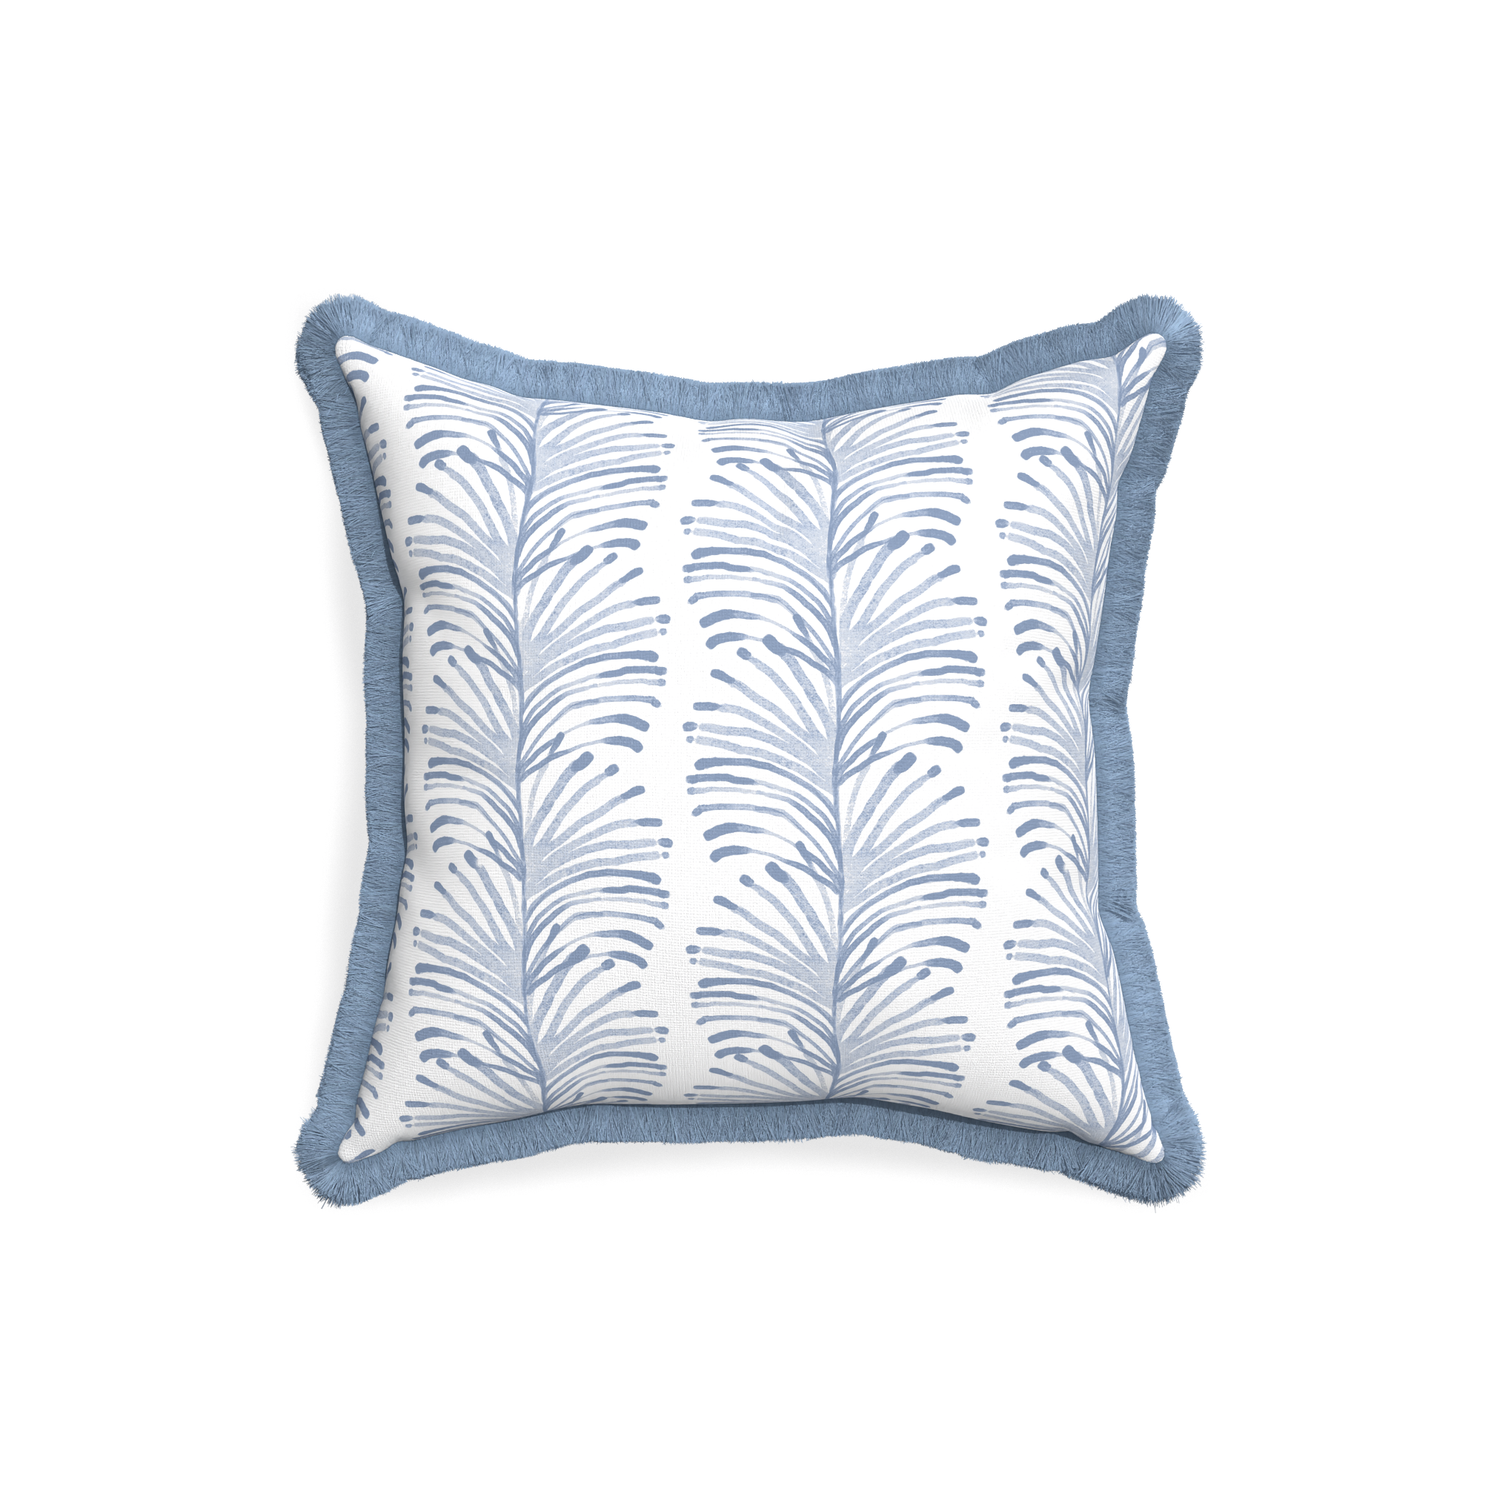 18-square emma sky custom pillow with sky fringe on white background